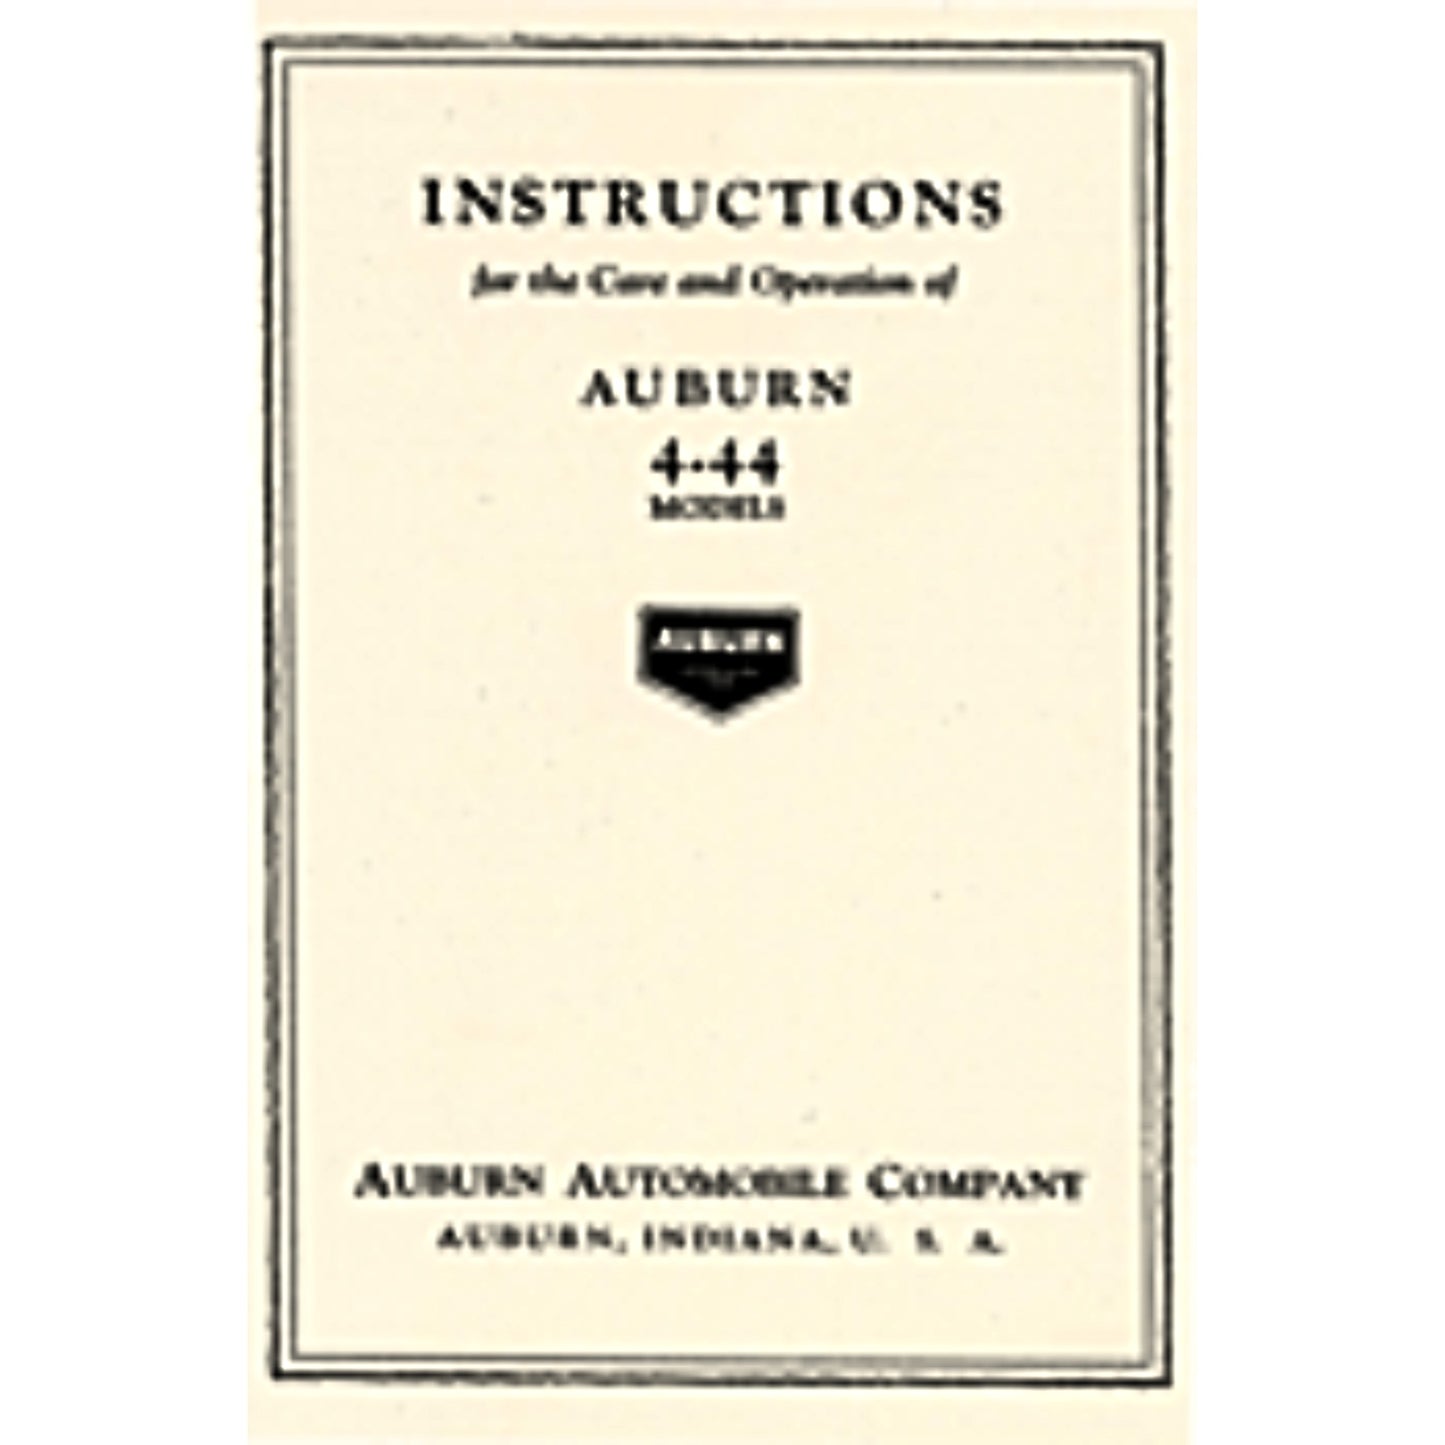 1926 Auburn 4-44 Owner's Manual